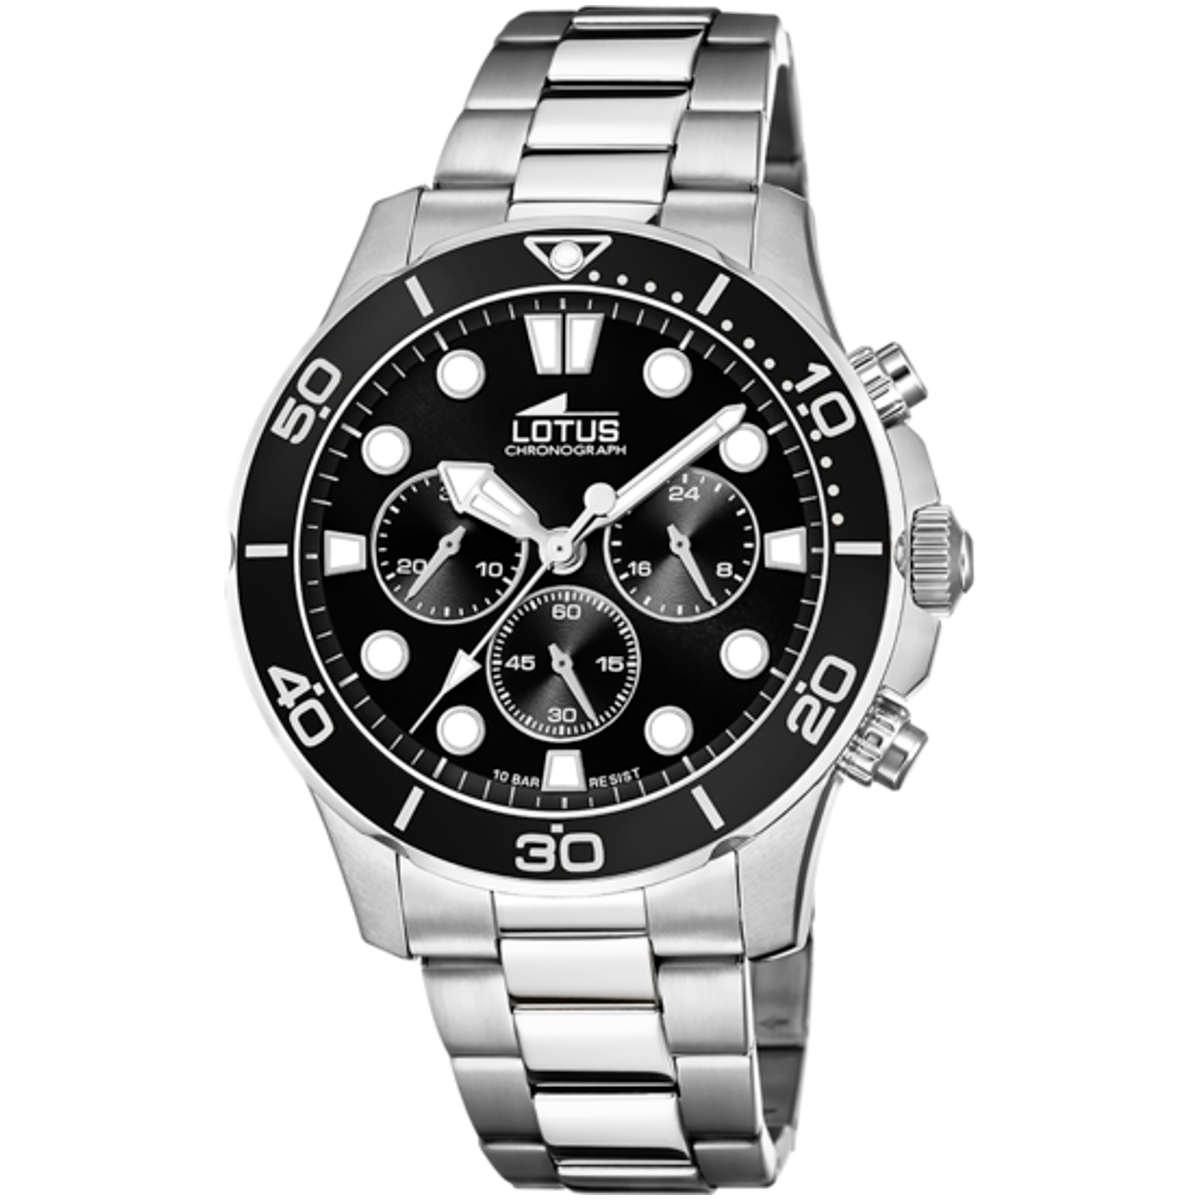 LOTUS Watch For Men 187563 | TRIAS SHOP Online Watches Store